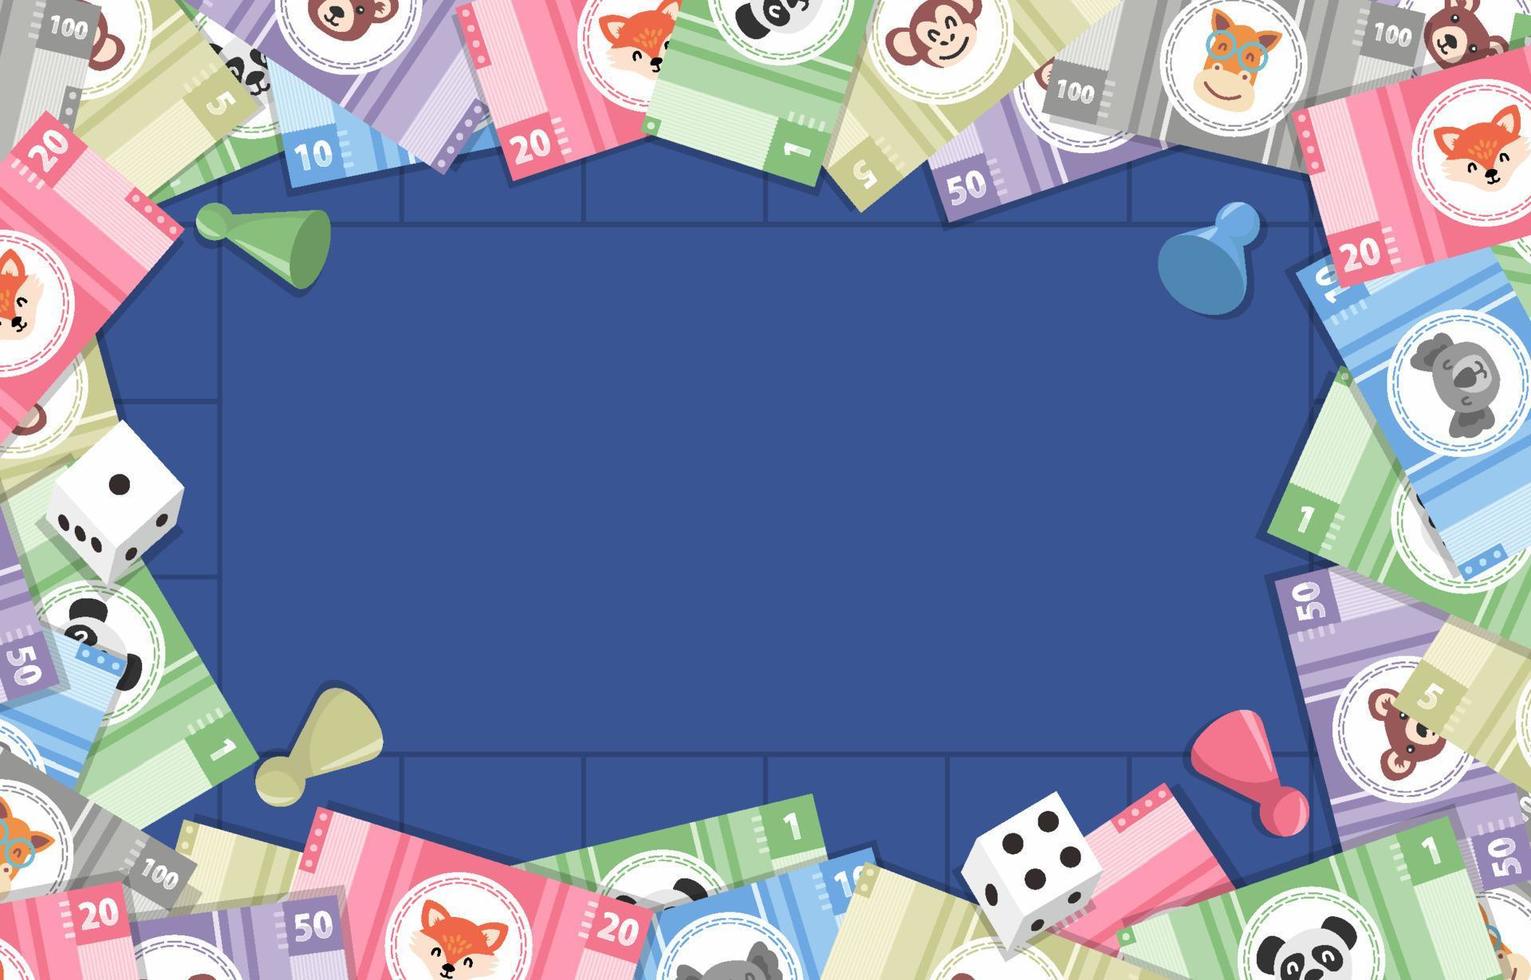 Monopoly bord spellen element achtergrond vector